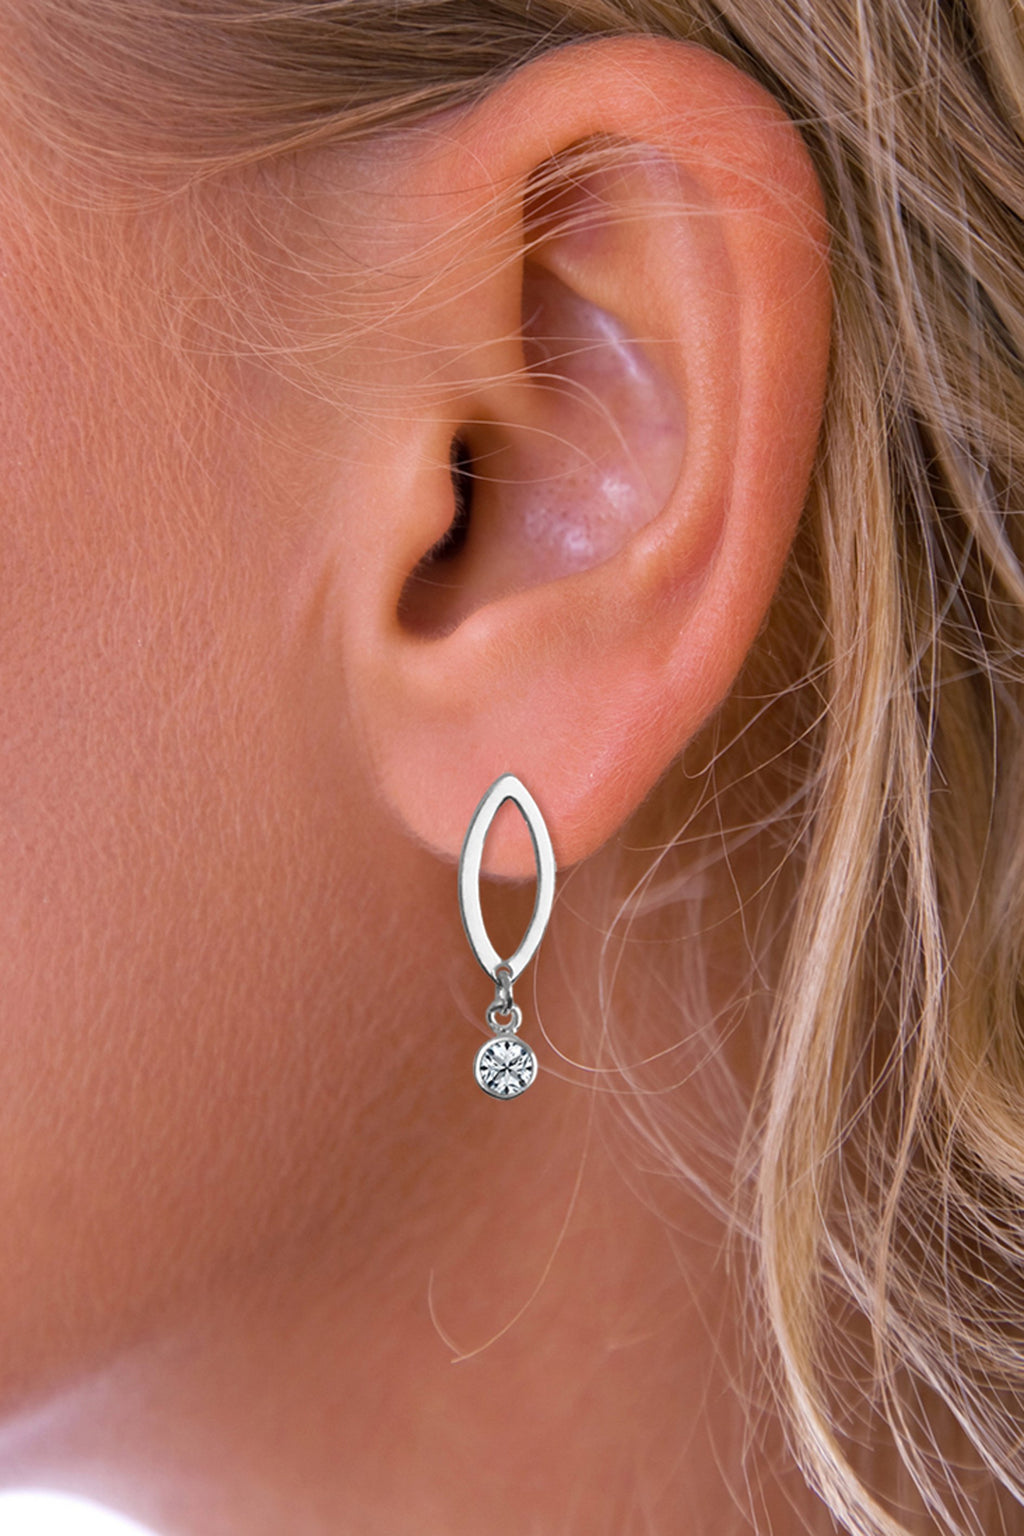 Silver Drop Crystal Earrings